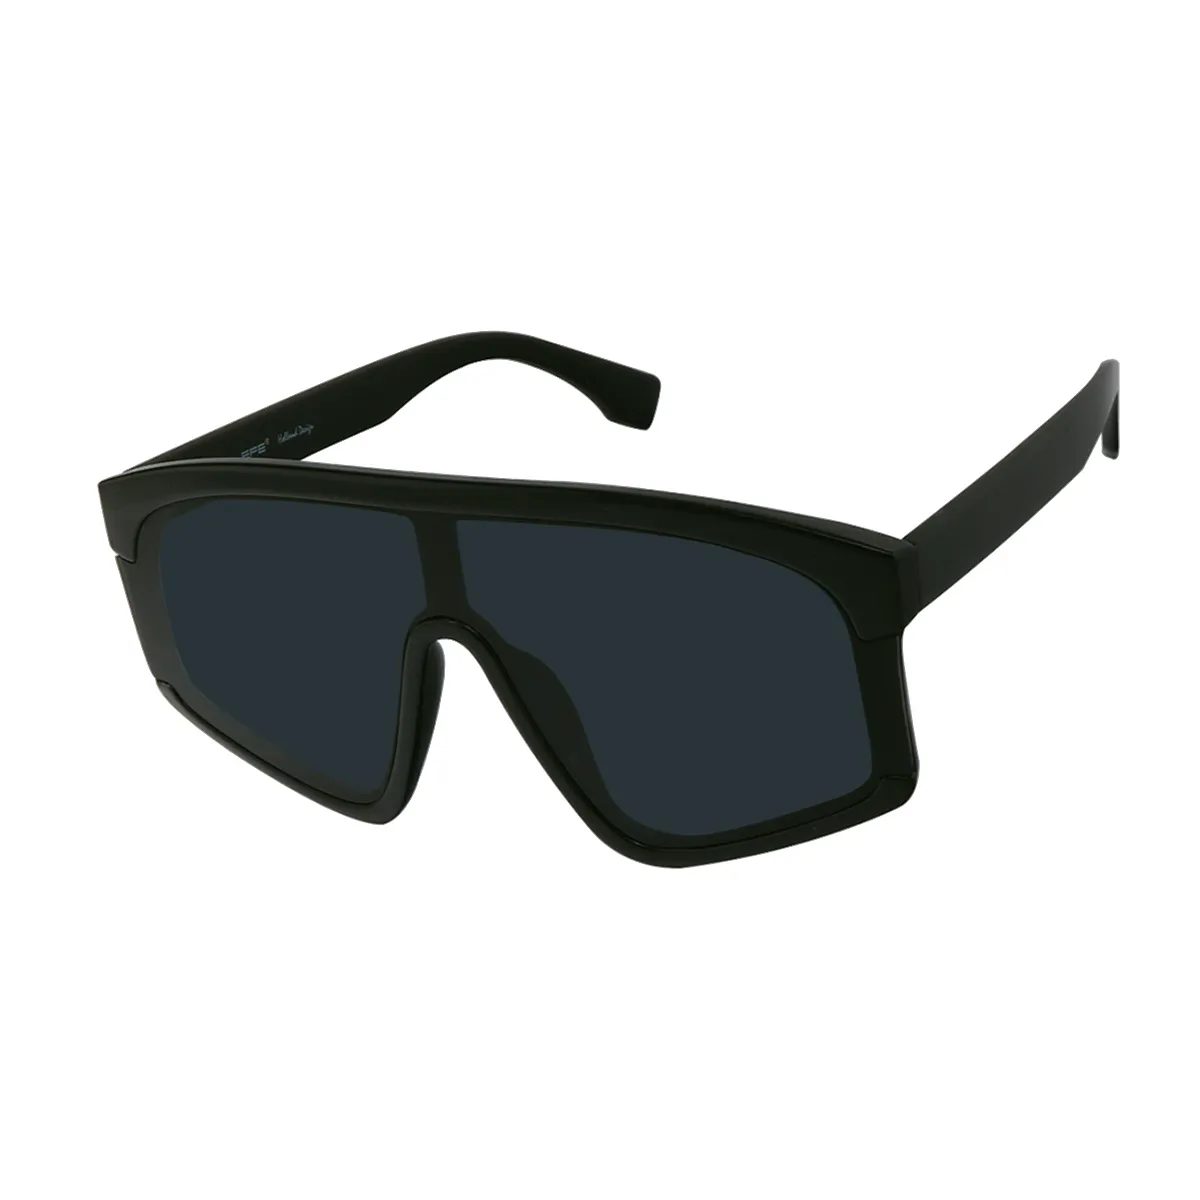 Morgan -  Black Sunglasses for Men & Women